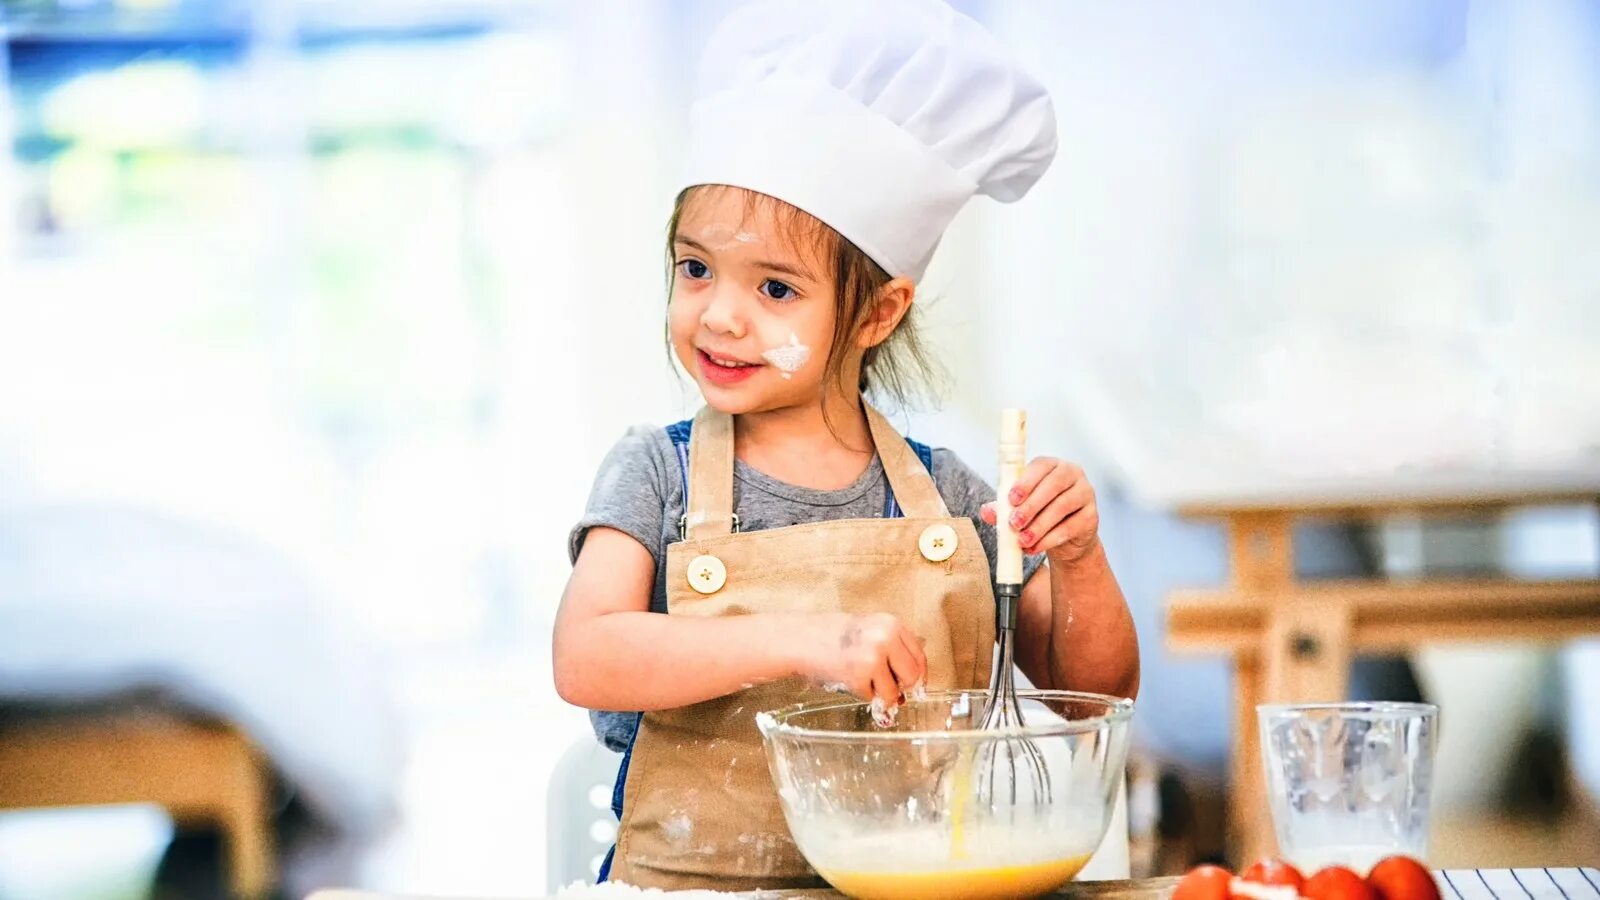 Kids cooking. Детский кулинарный мастер класс. Мастер класс для детей готовка. Повар для детей. Кулинарные мастер классы для детей.